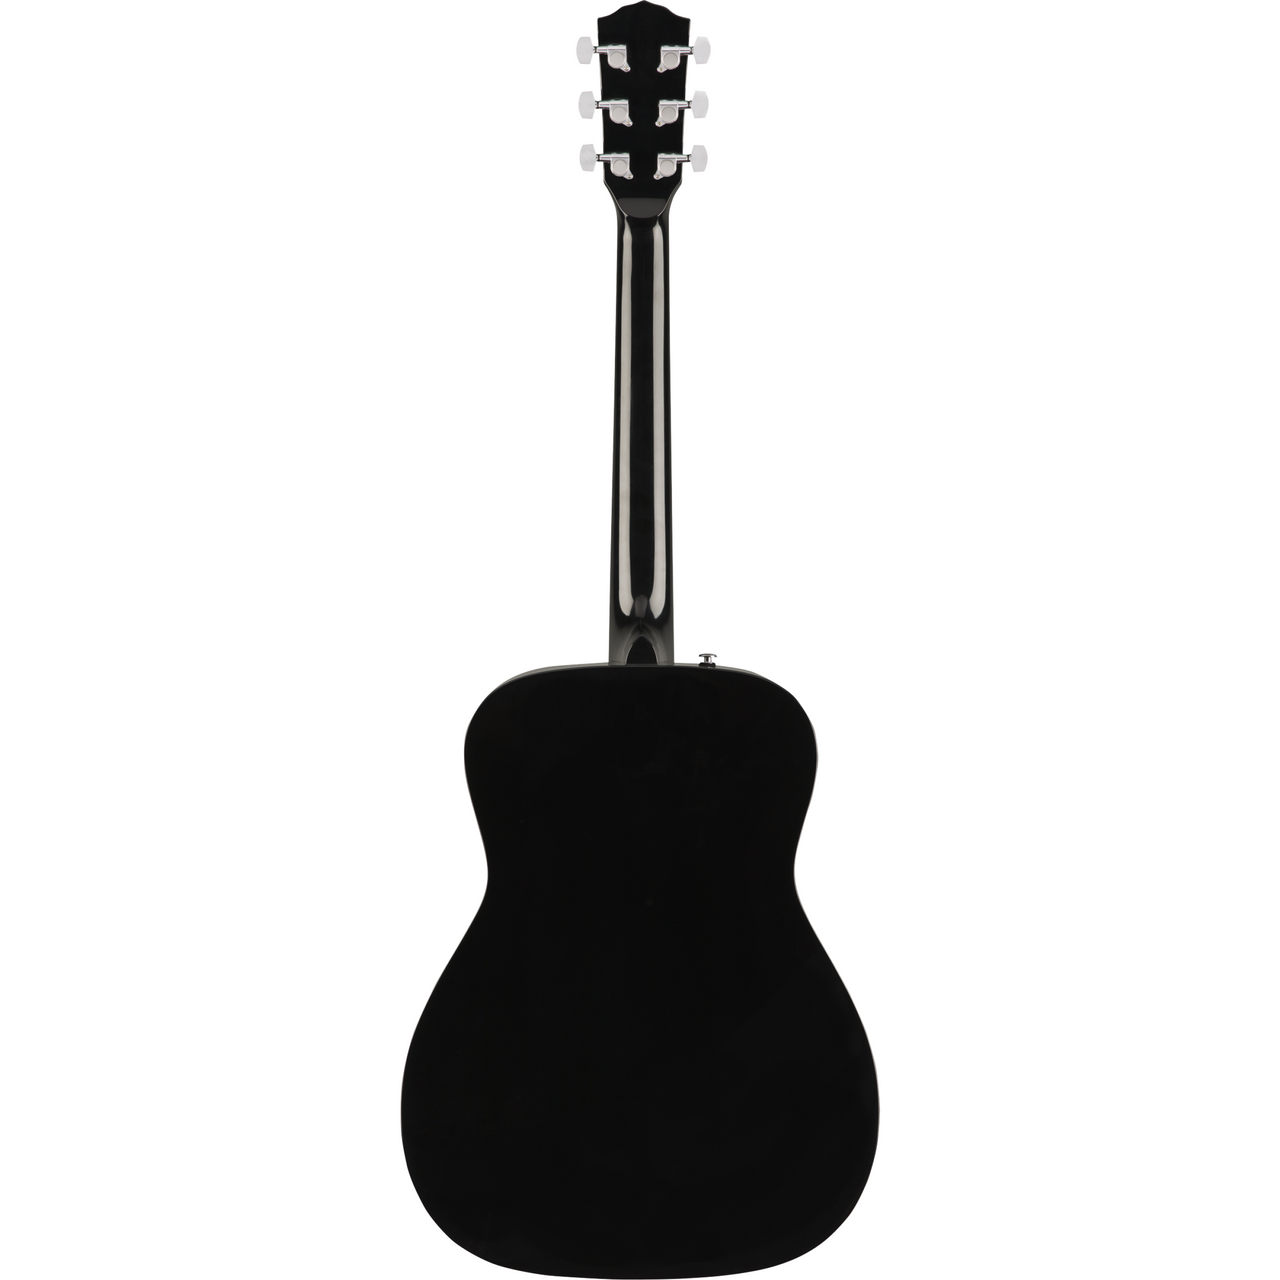 Paquete Guitarra Acustica Fender Cc-60s Concert Pack V2blk, 0970150406